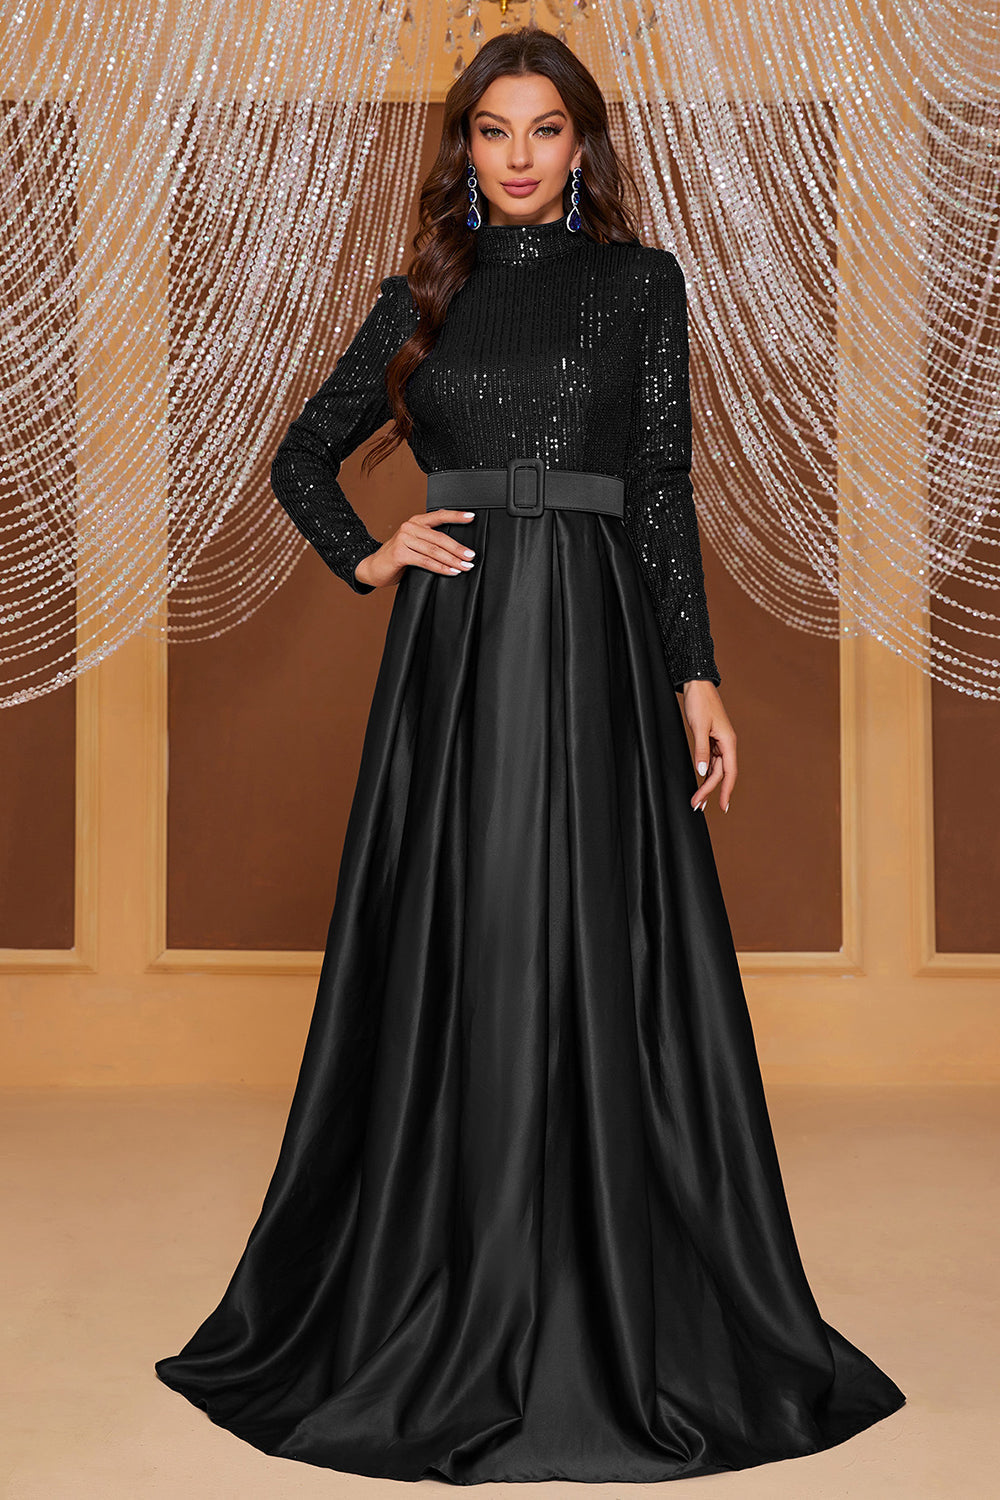 Black A Line High Neck Long Formal Dress with Sequins